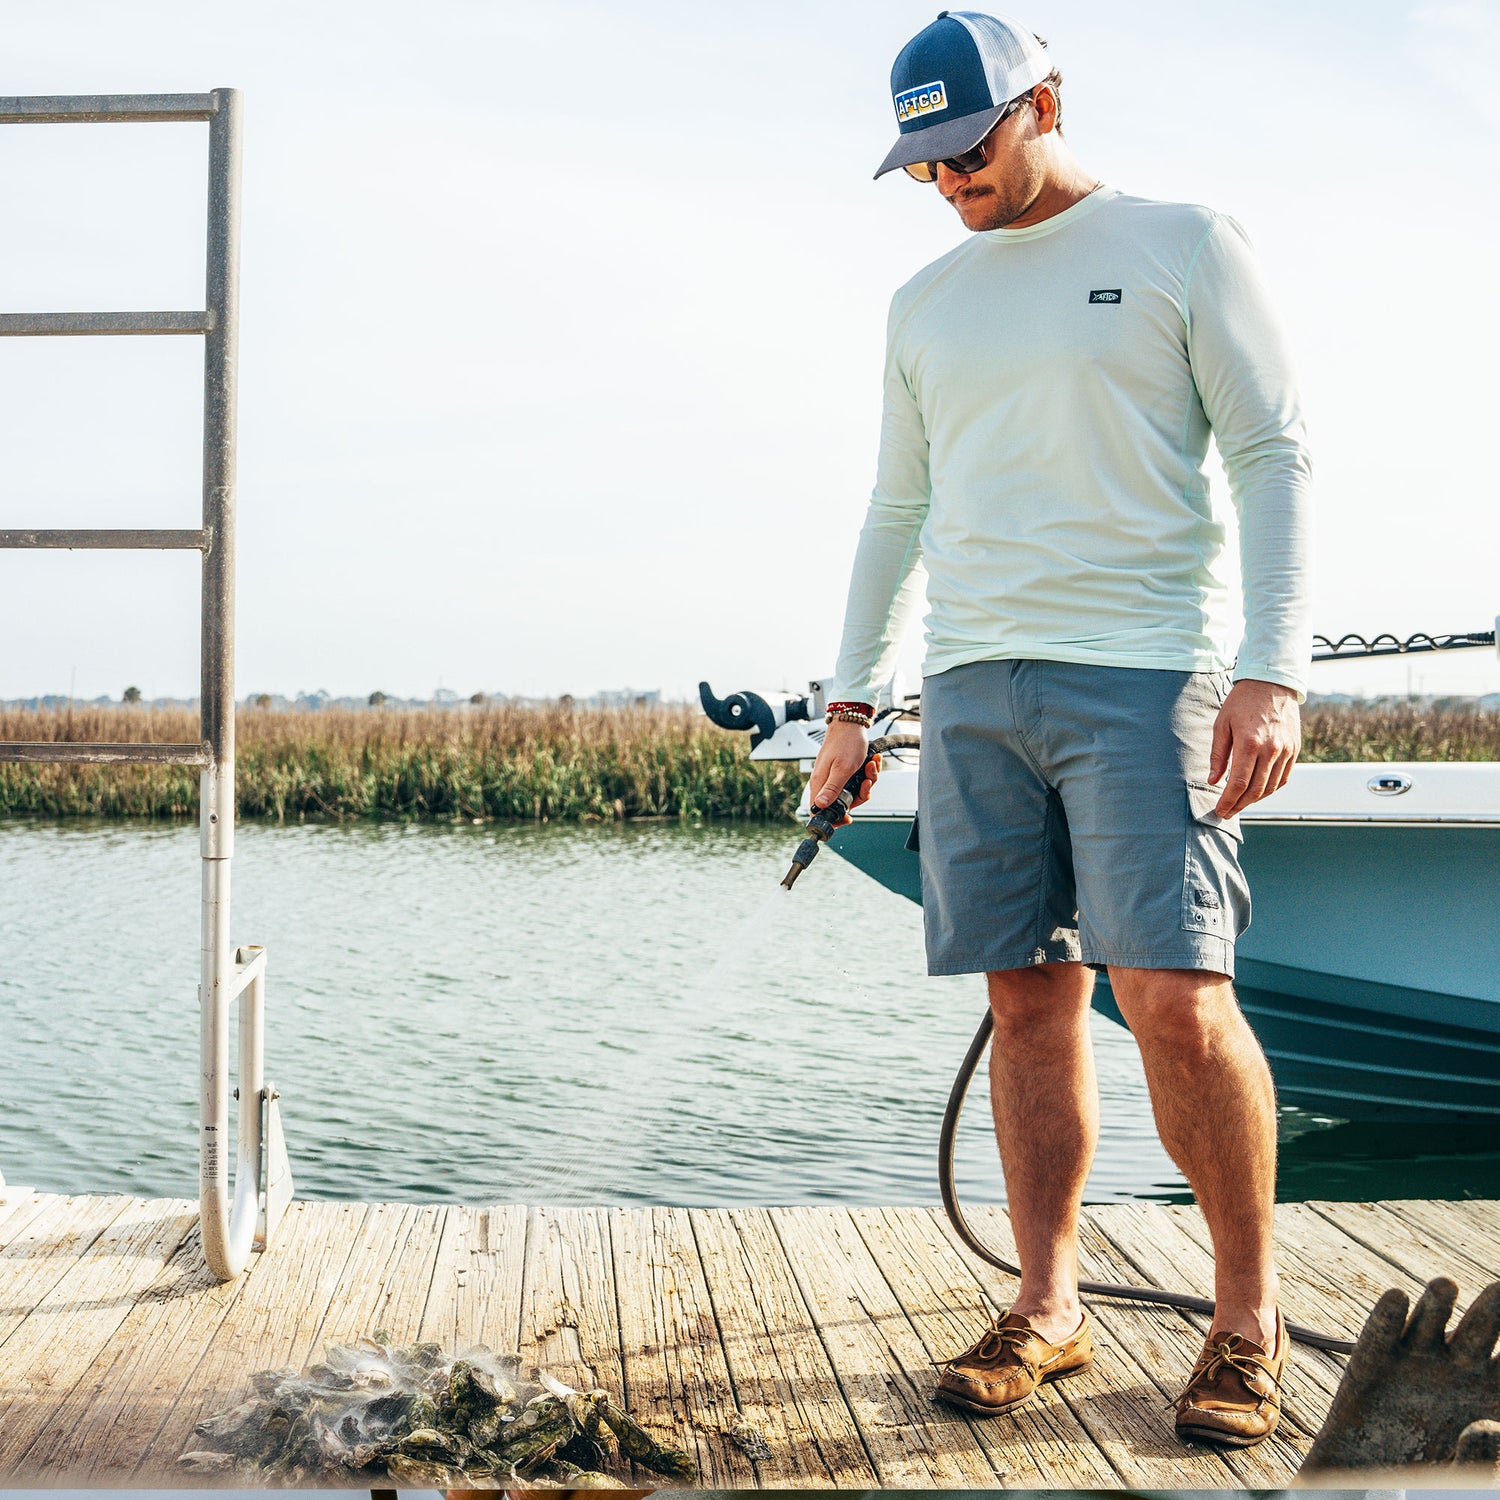 Air O Mesh Performance Fishing Shirt, Long Sleeve Sun Protection Shirt